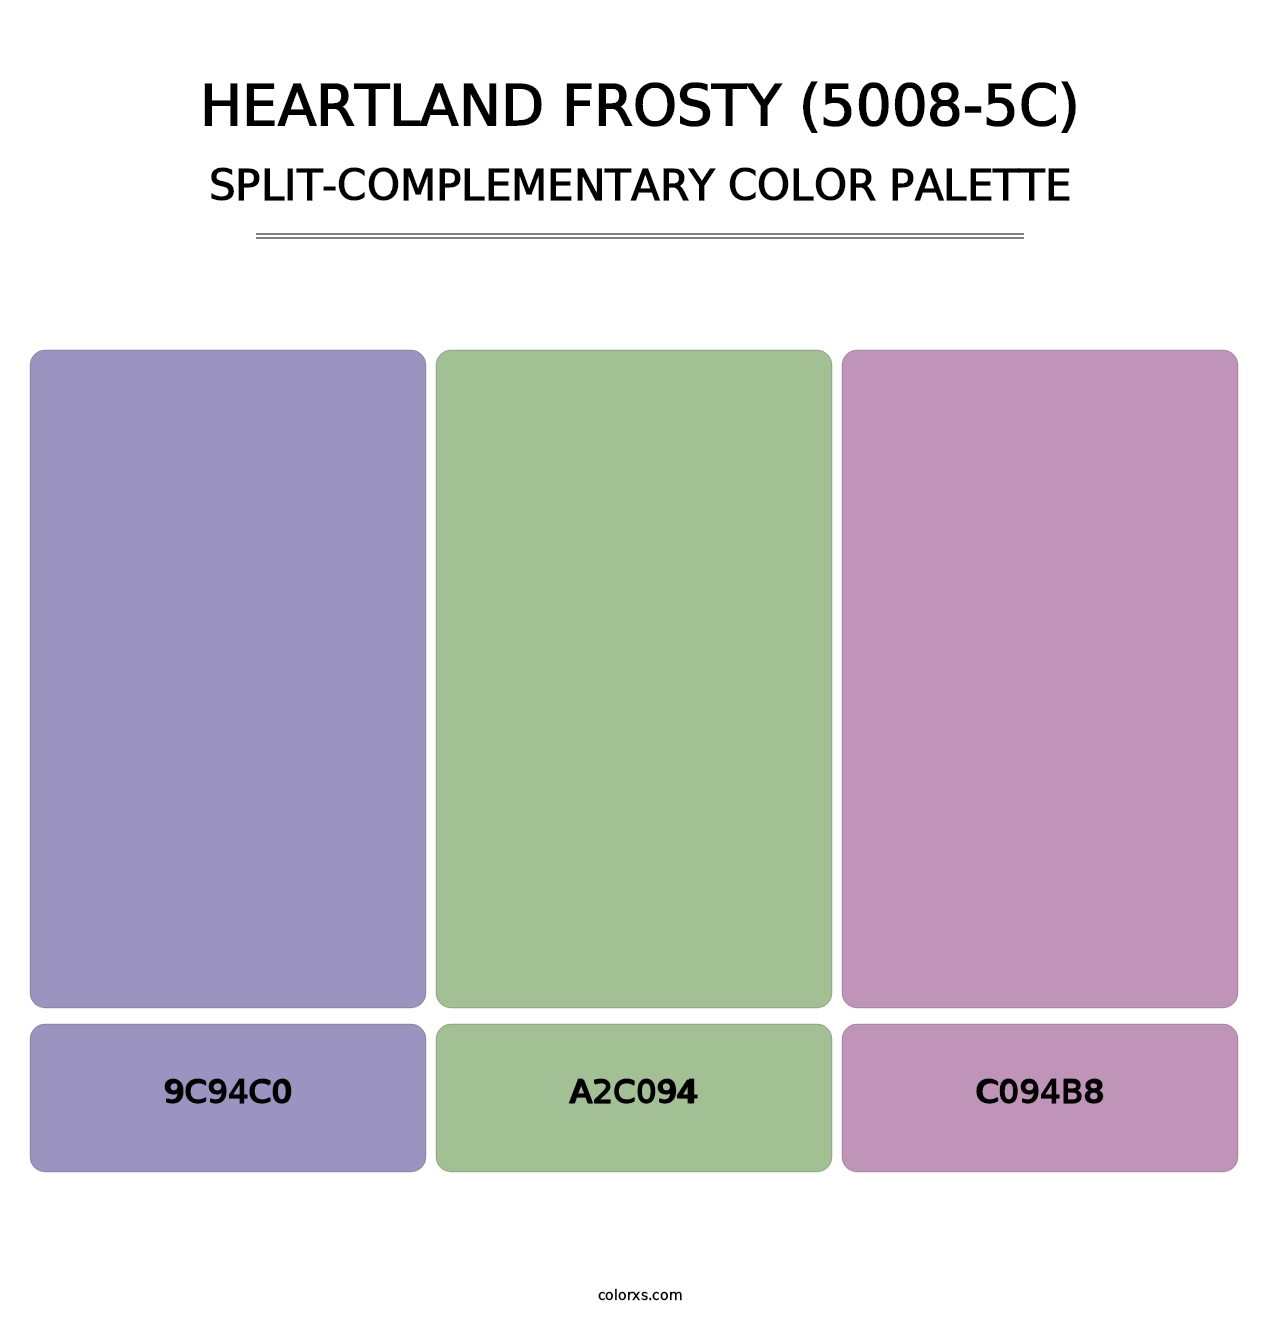 Heartland Frosty (5008-5C) - Split-Complementary Color Palette